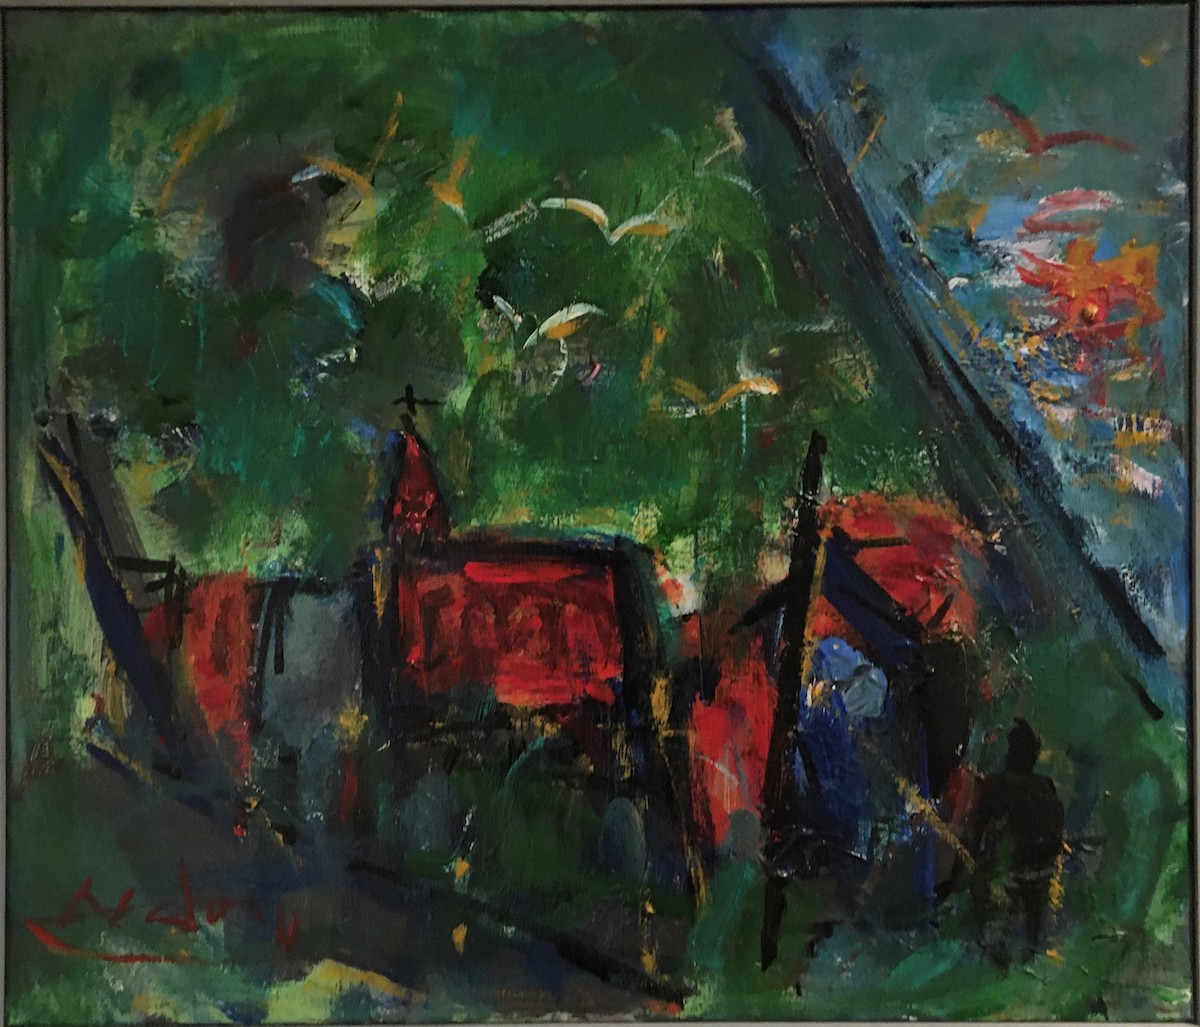 “Mikladalur kirke“.  Oil and acrylic on canvas. 60 x 60 cm.